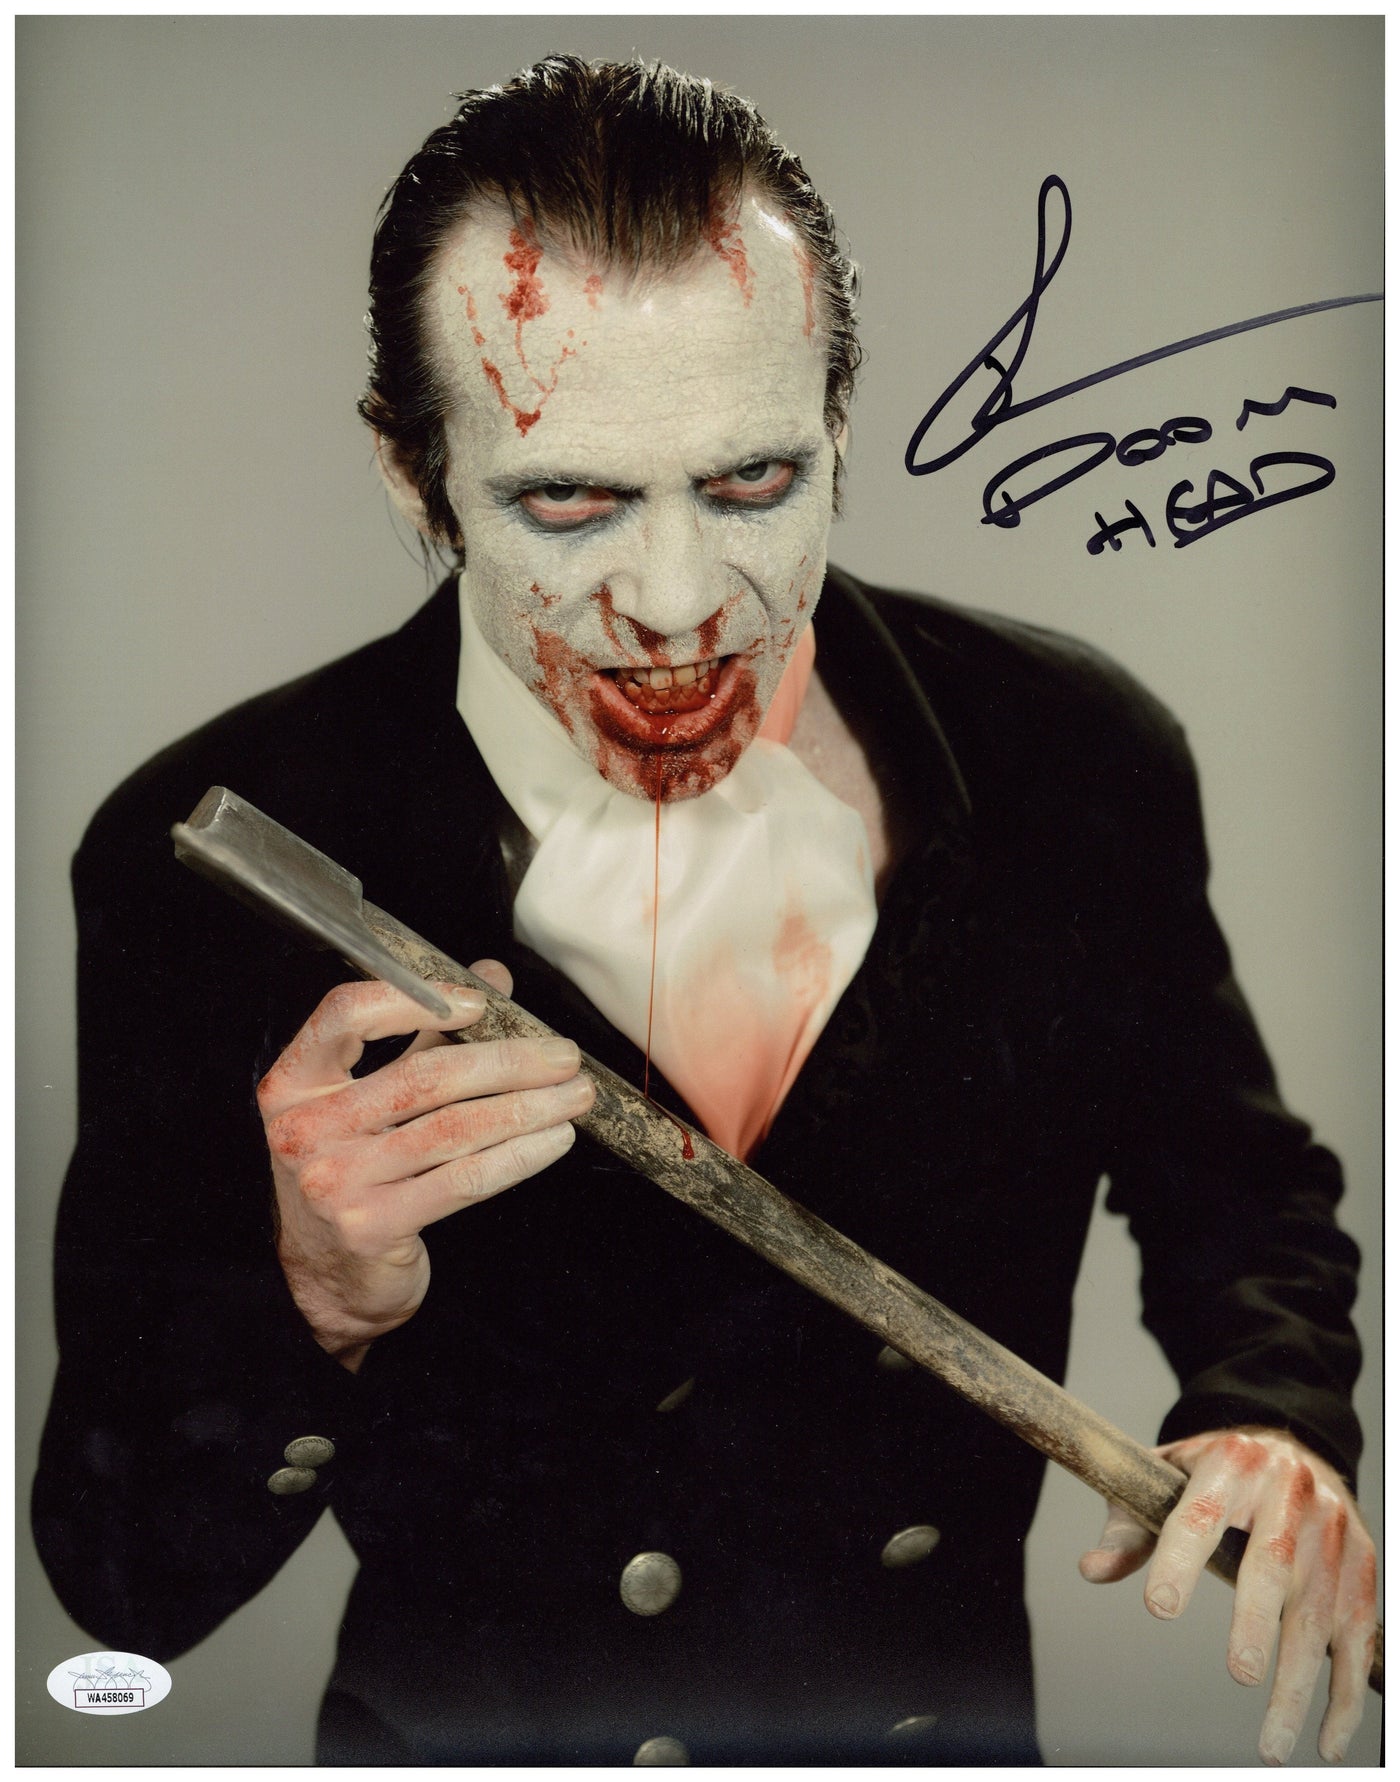 Richard Brake Signed 11x14 Photo 31 Doom Head Autographed JSA COA #4